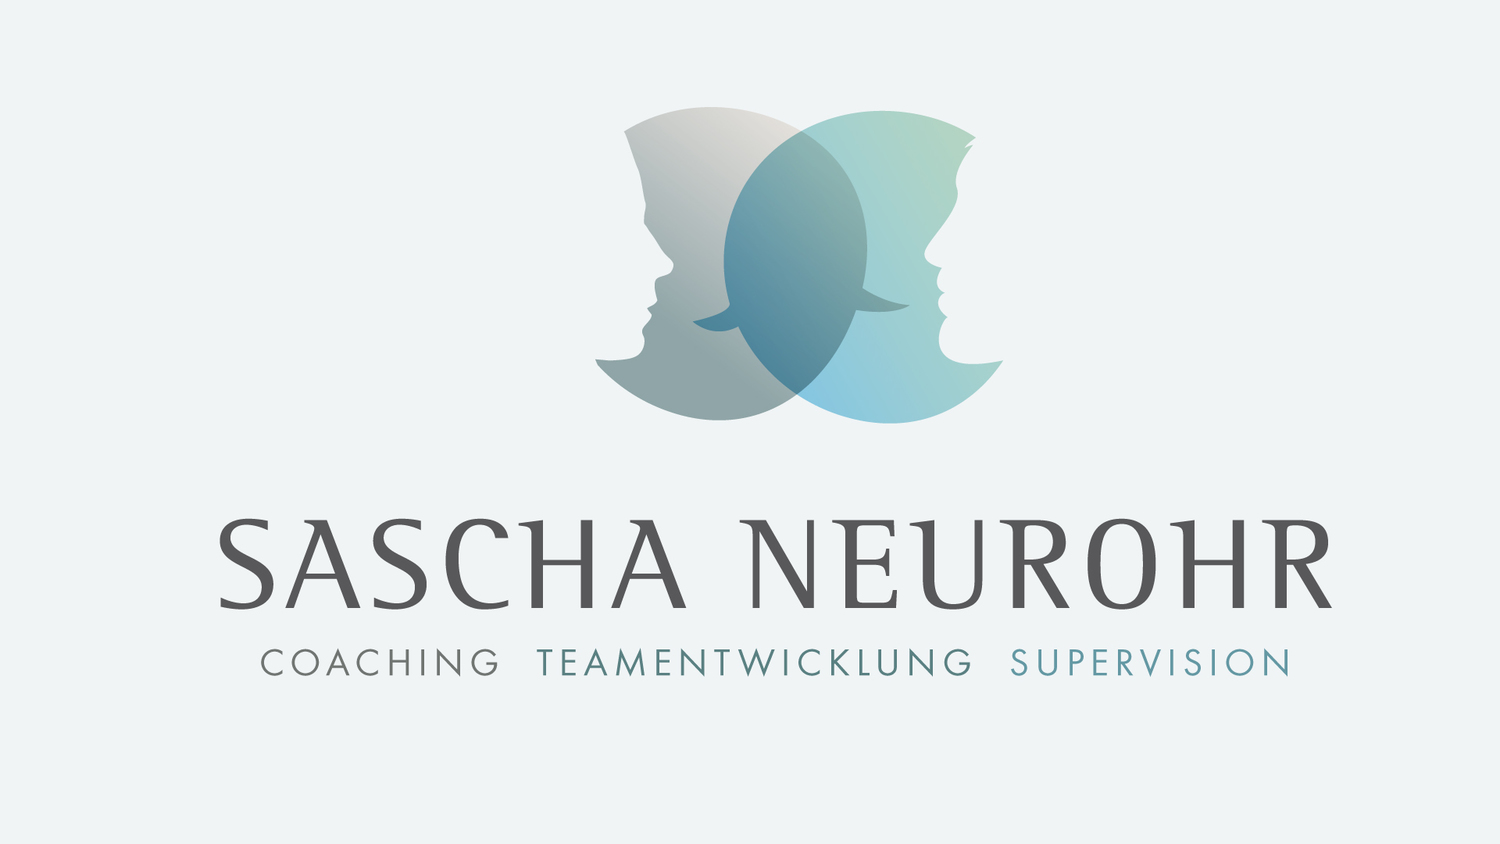 Sascha Neurohr | Coaching | Teamentwicklung | Supervision